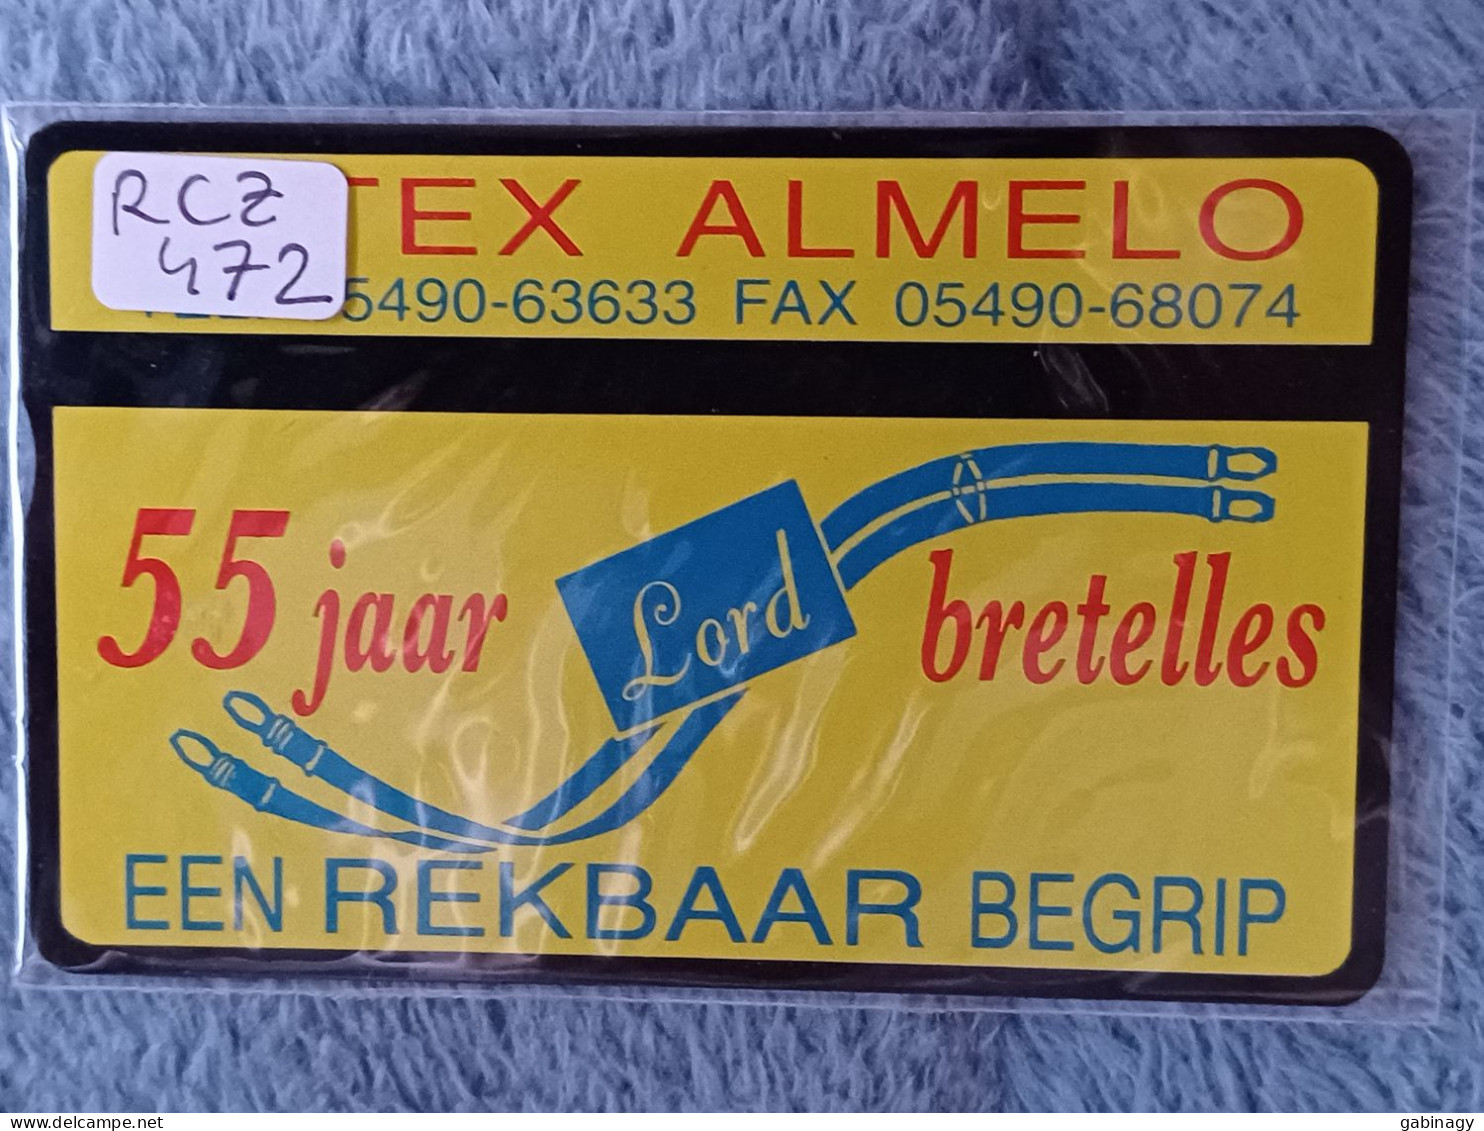 NETHERLANDS - RCZ472 - Eltex Almelo 55 Jaar Lord Bretelles - 1.030EX. - Privées